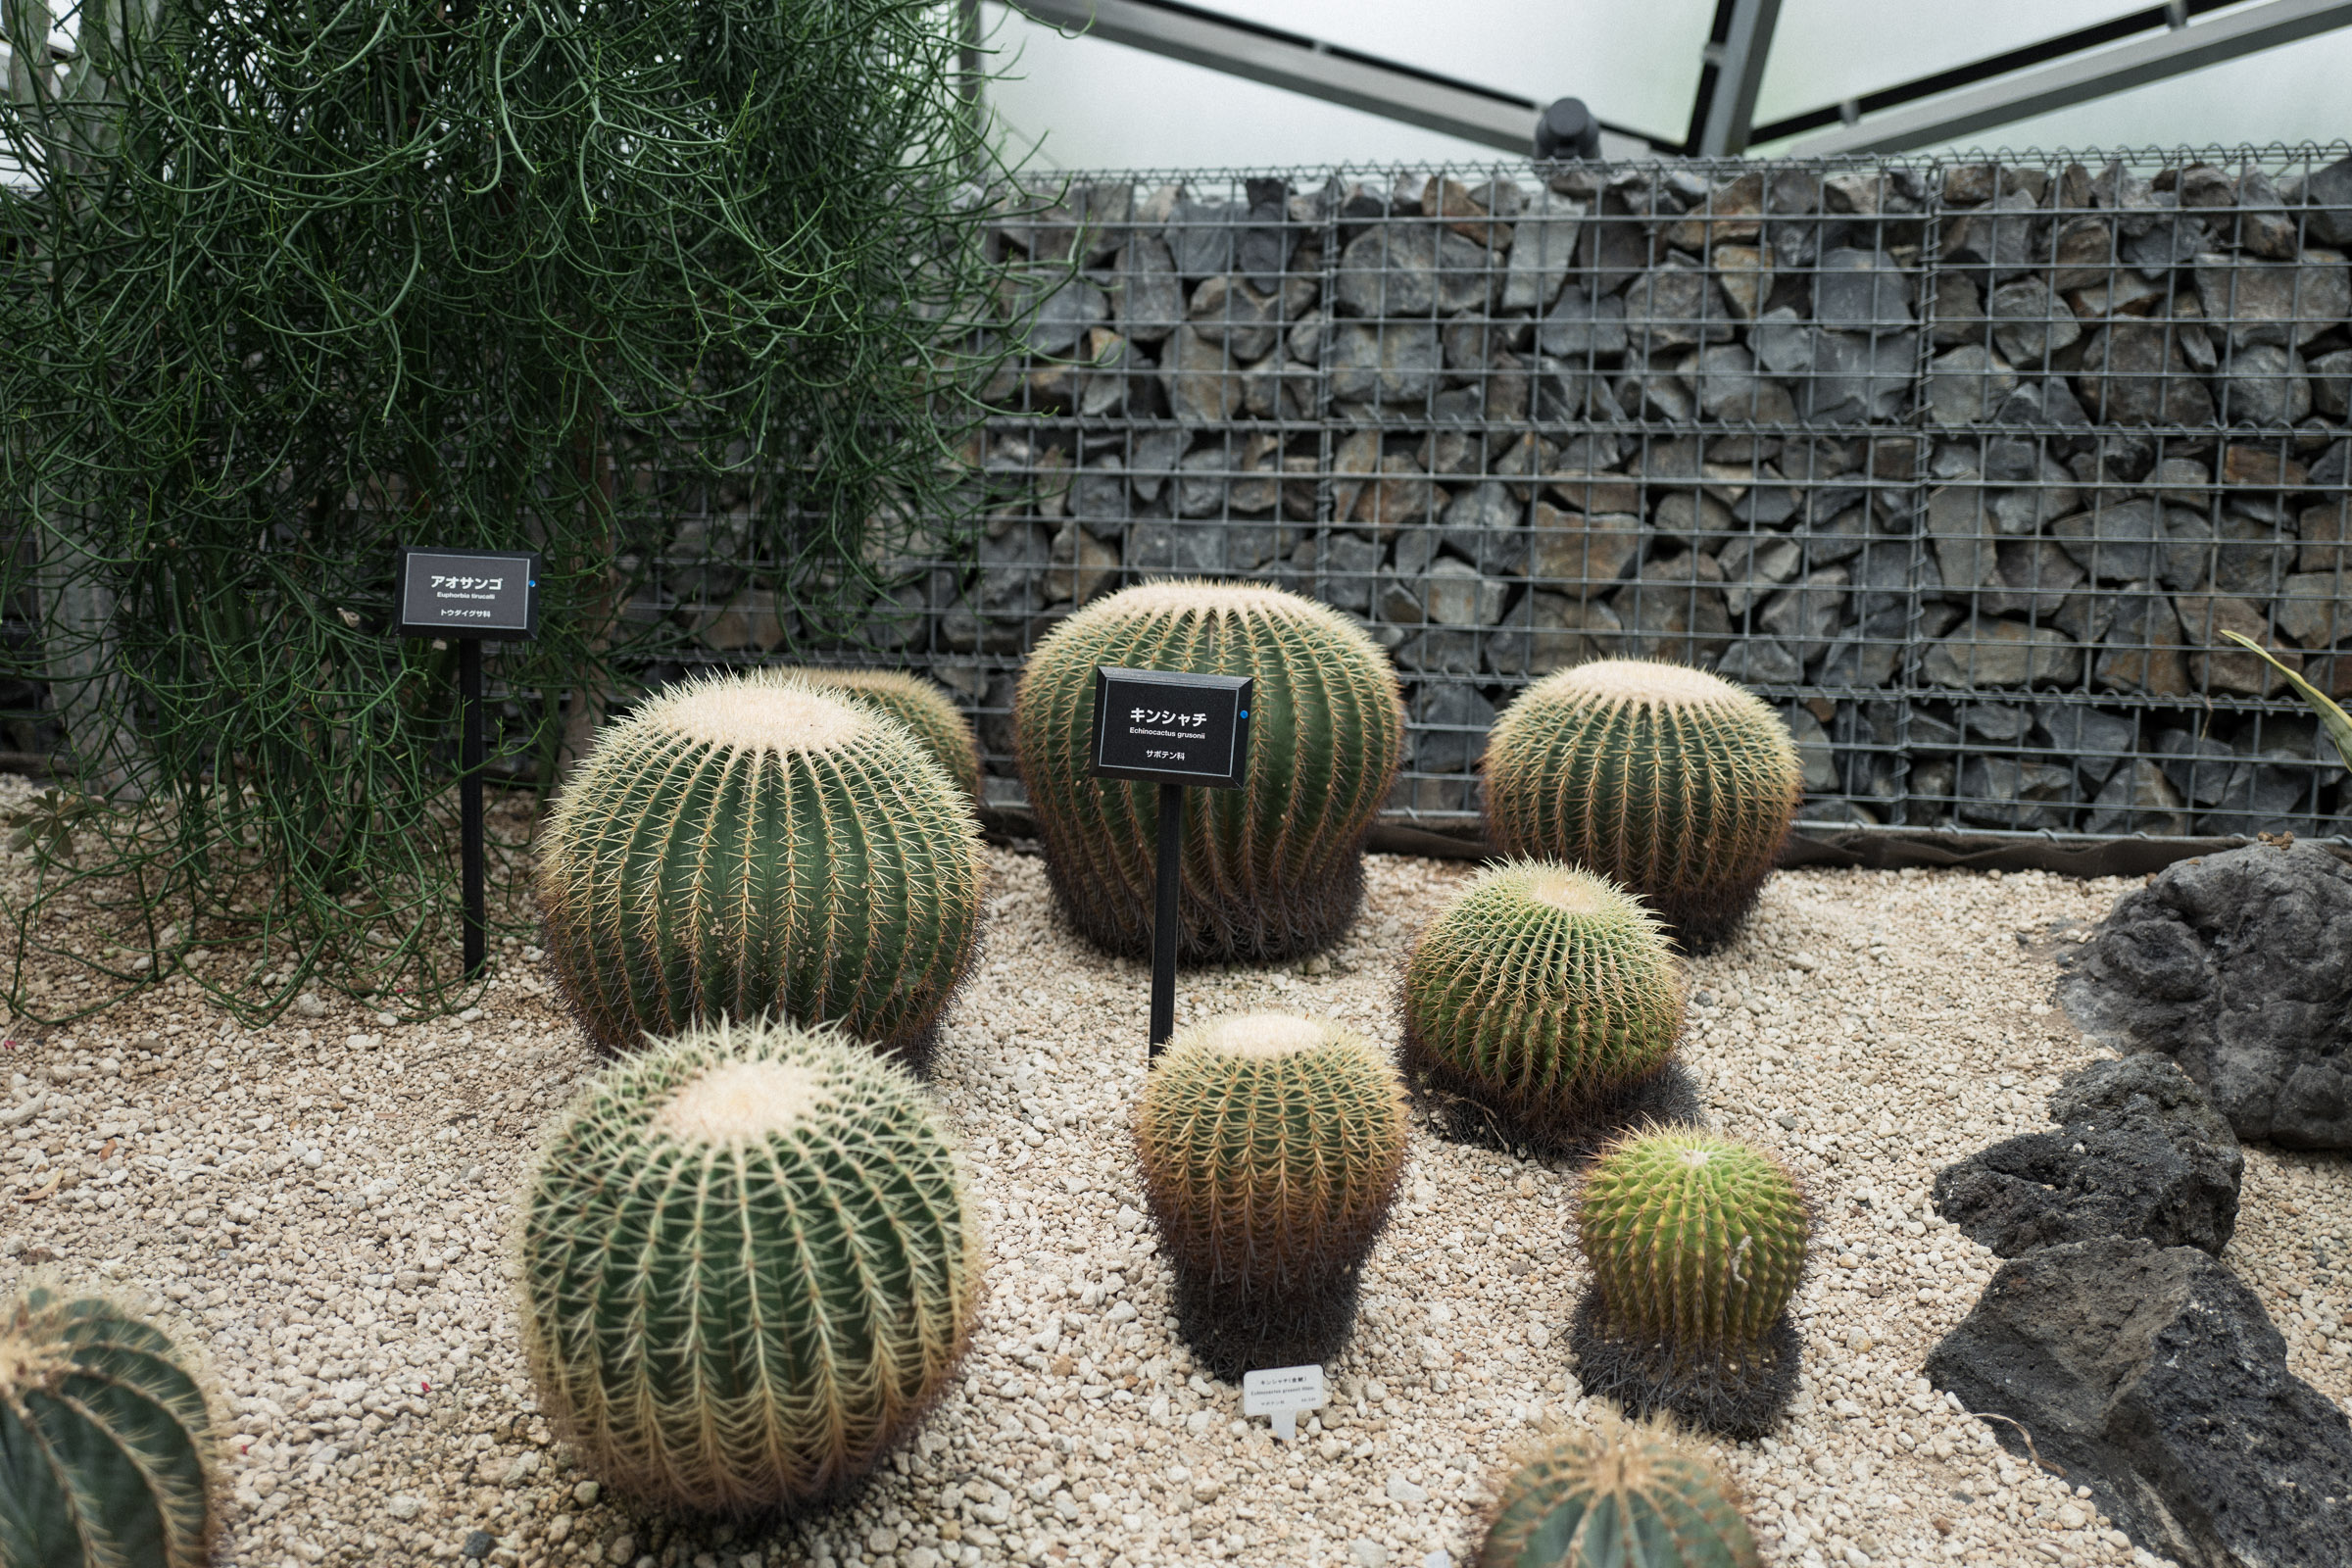 Cacti at the Gyoen National Garden greenhouse